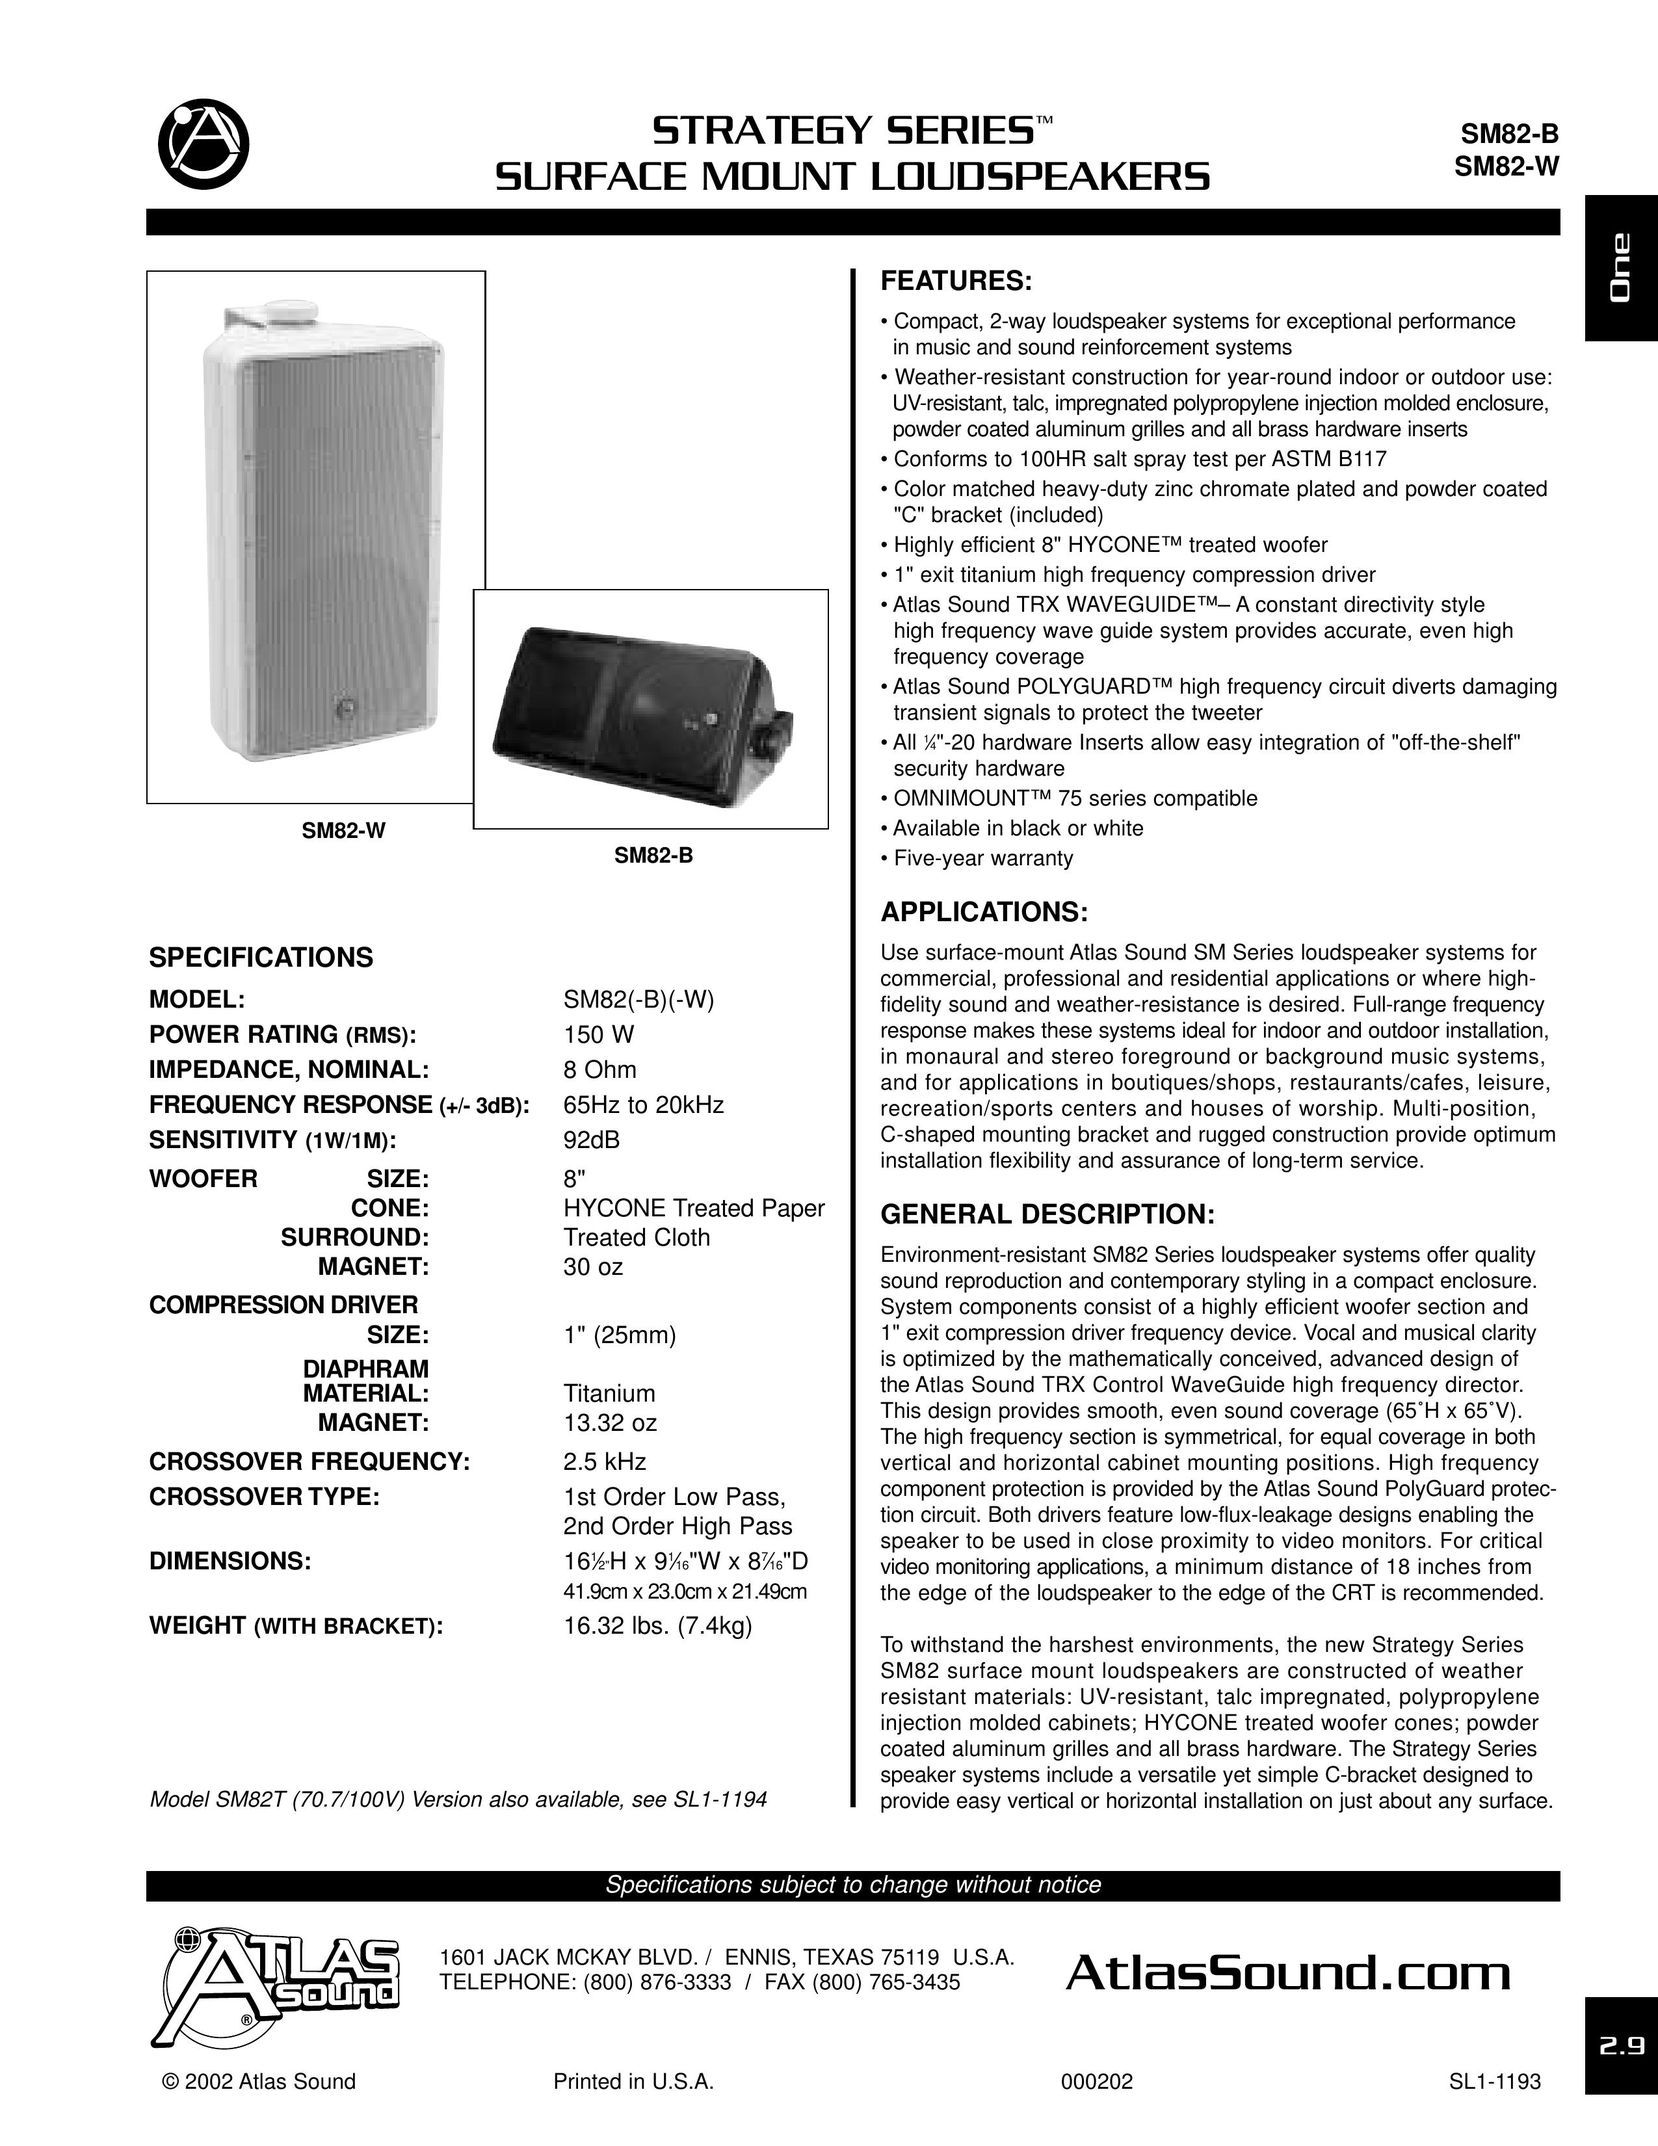 Atlas Sound SM82-B Portable Speaker User Manual